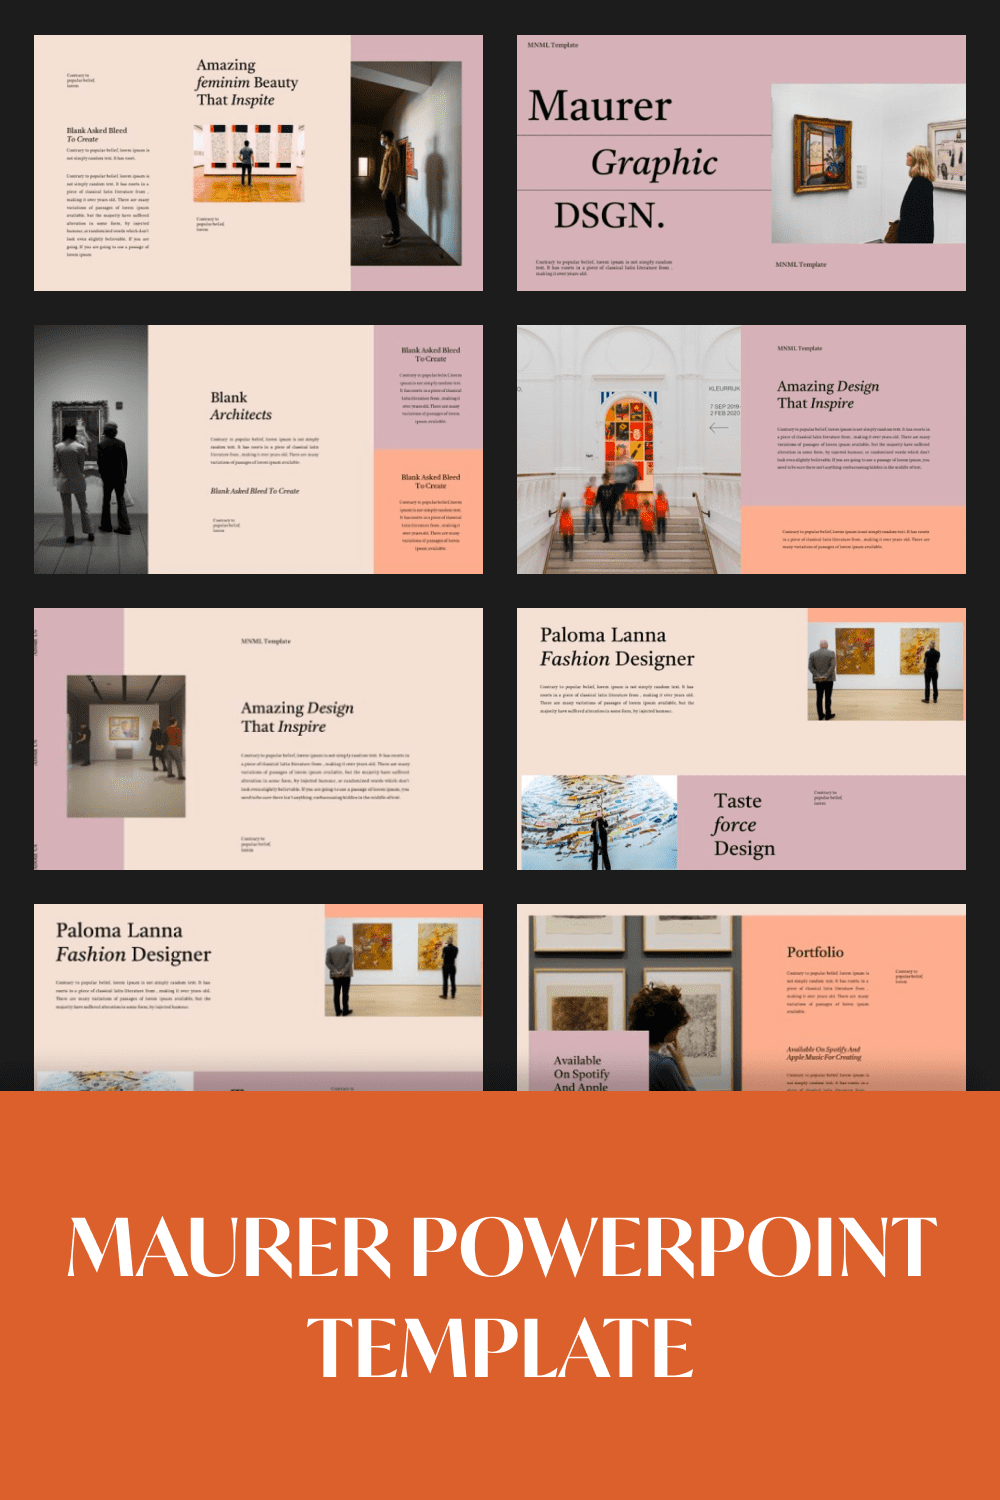 Maurer Powerpoint Template by MasterBundles Pinterest Collage Image.